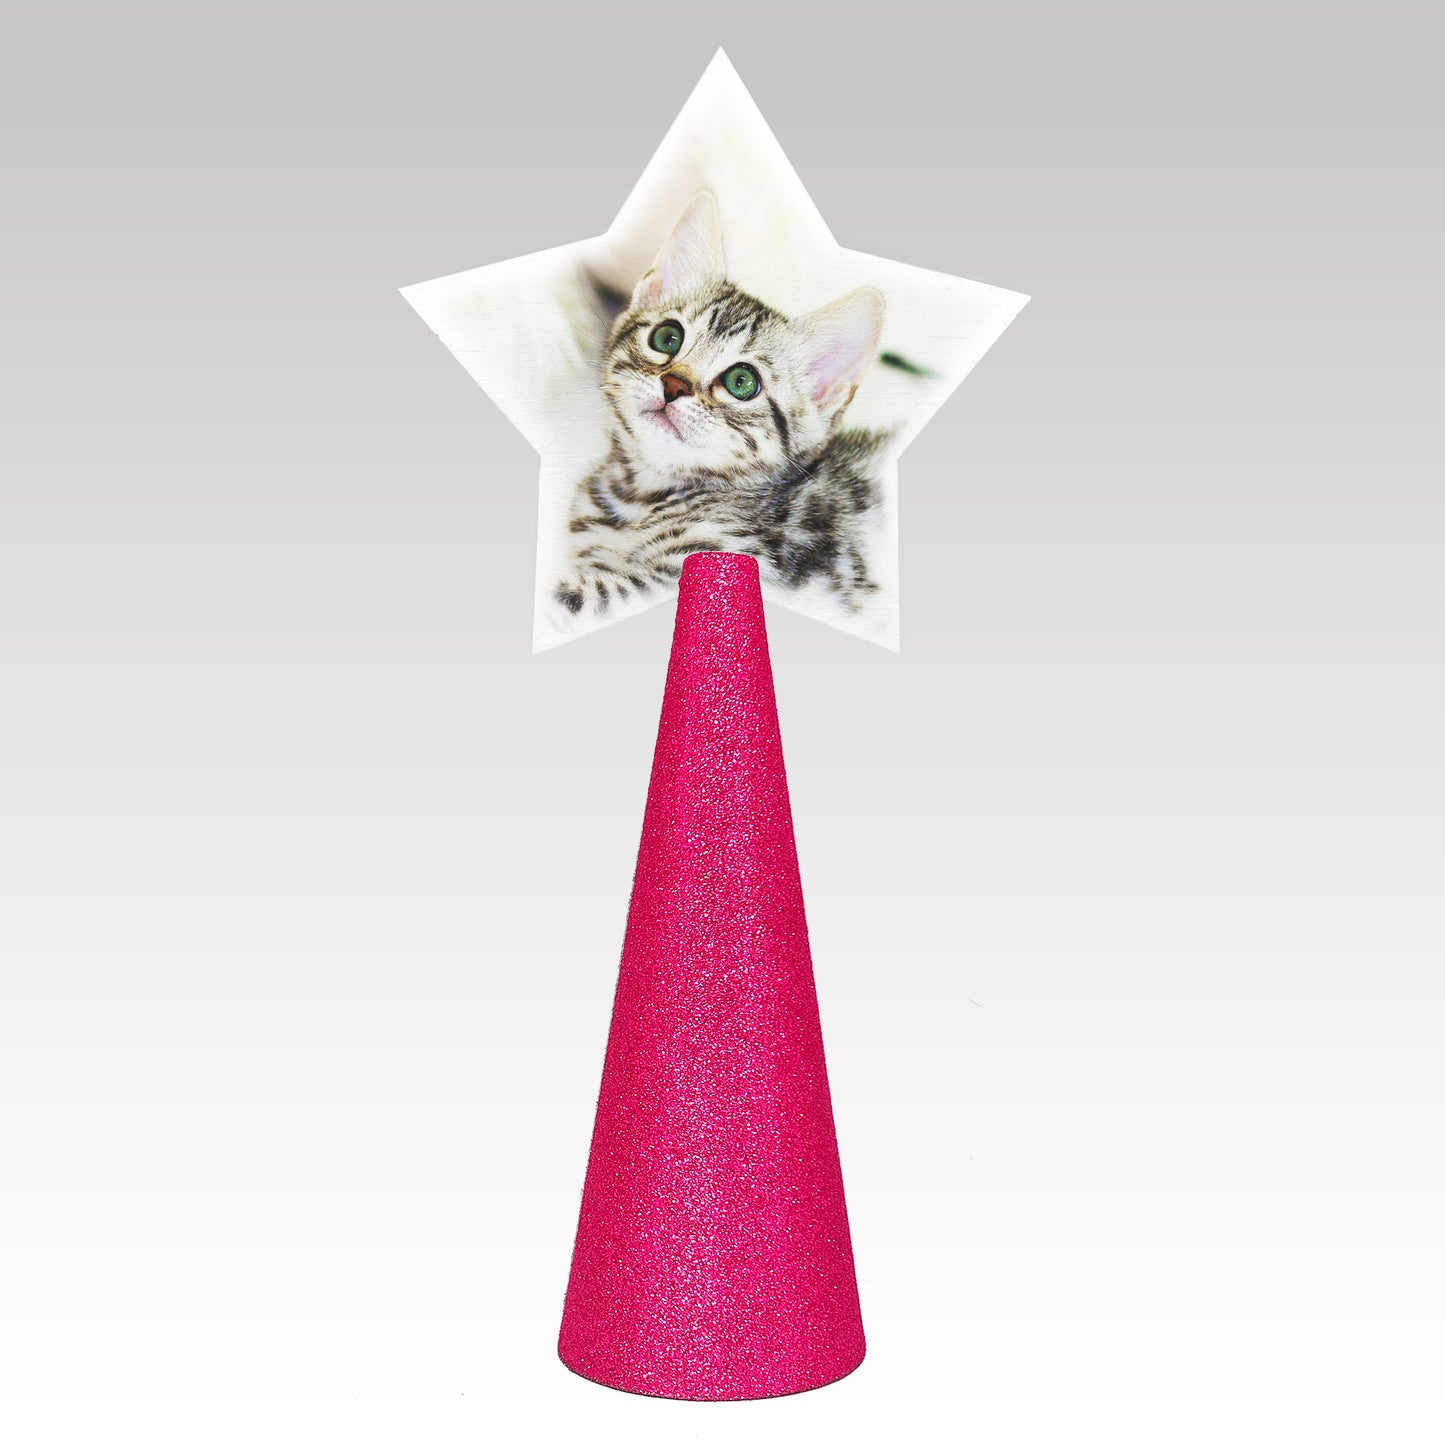 Custom tree topper - White Star with sample kitten photo - hot pink glitter cone